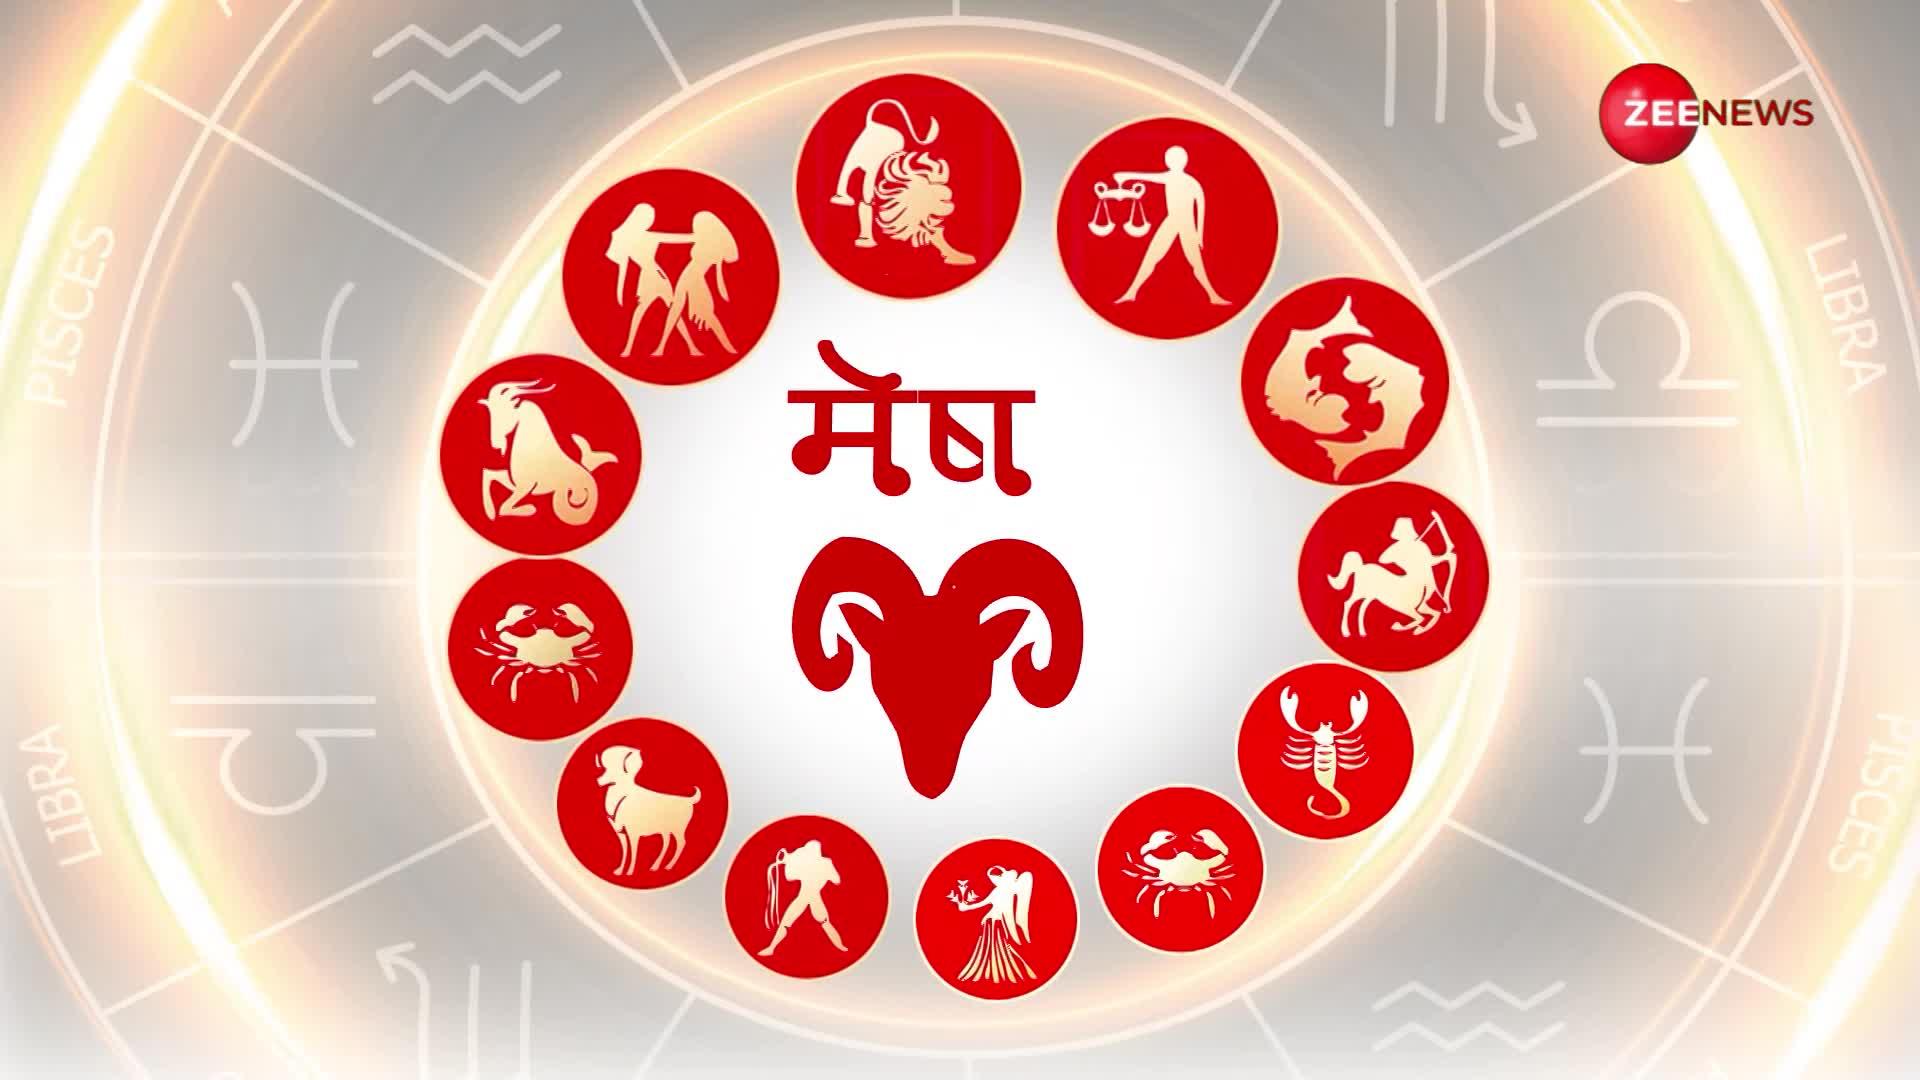 Daily Rashifal: आपकी राशि की सबसे सटीक भविष्यवाणी। 2nd September 2023 | Shiromani Sachin | Astrology